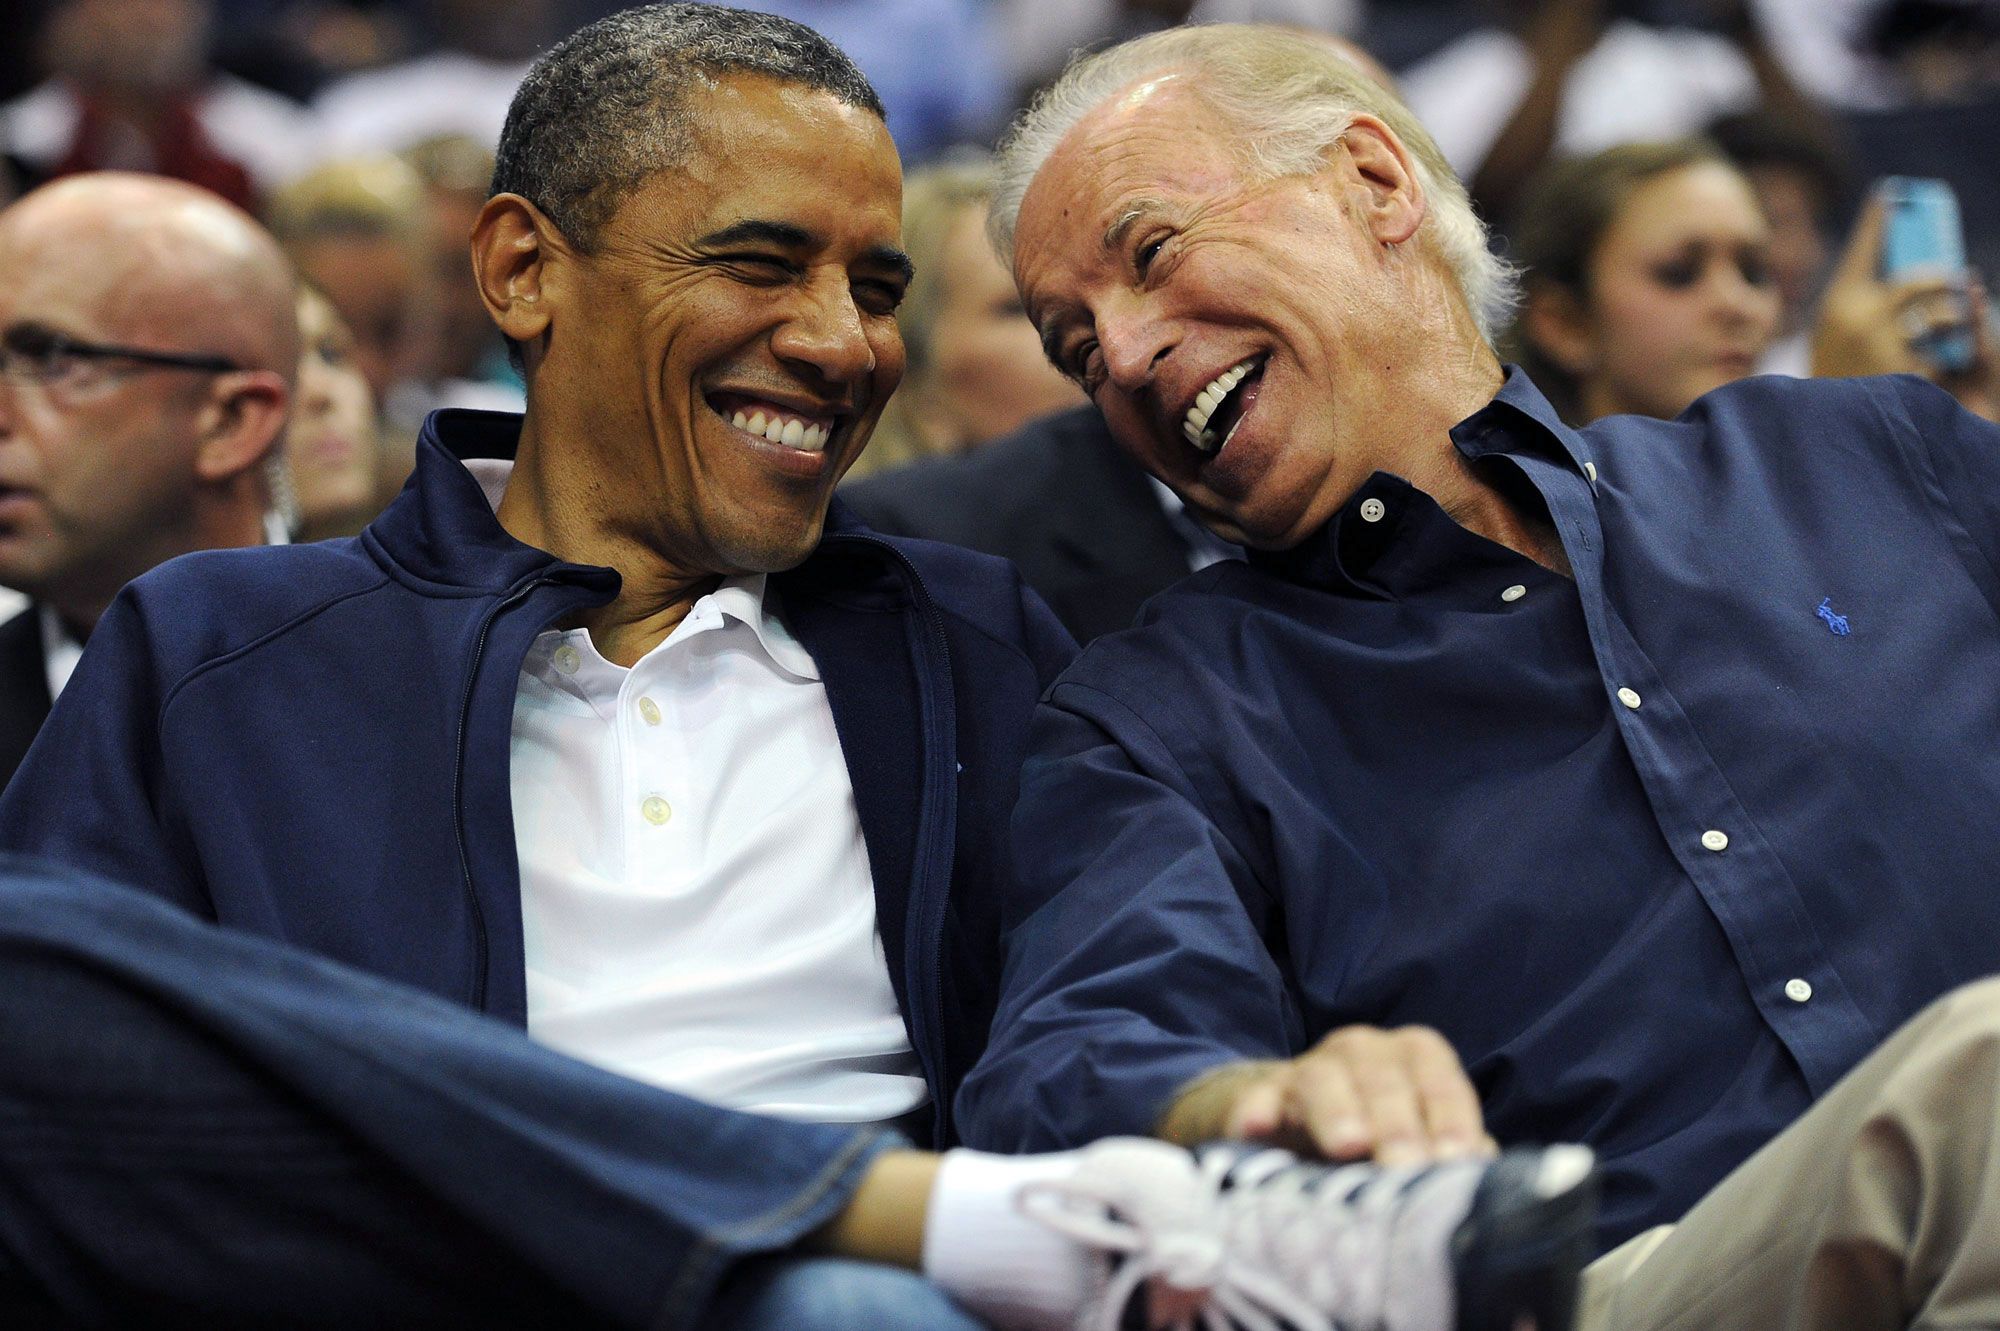 President Obama and Joe Biden's in 24 Photos